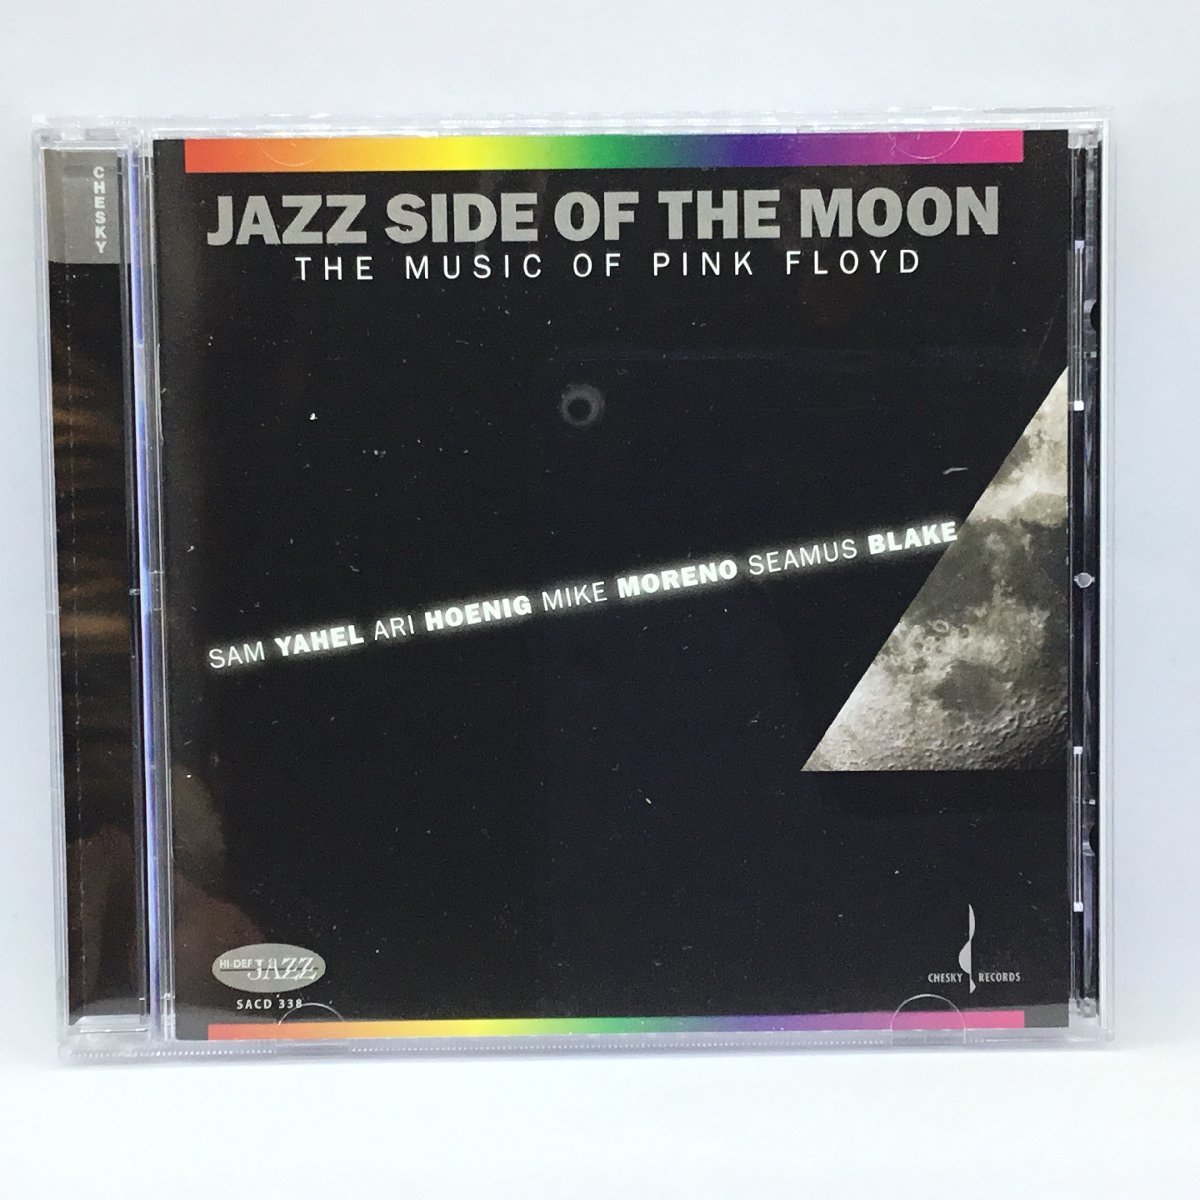 SACDハイブリッド◇Sam Yahel, Ari Hoenig, Mike Moreno, Seamus Blake / Jazz Side Of The Moon (The Music Of Pink Floyd) (SACD HYBRID)の画像3